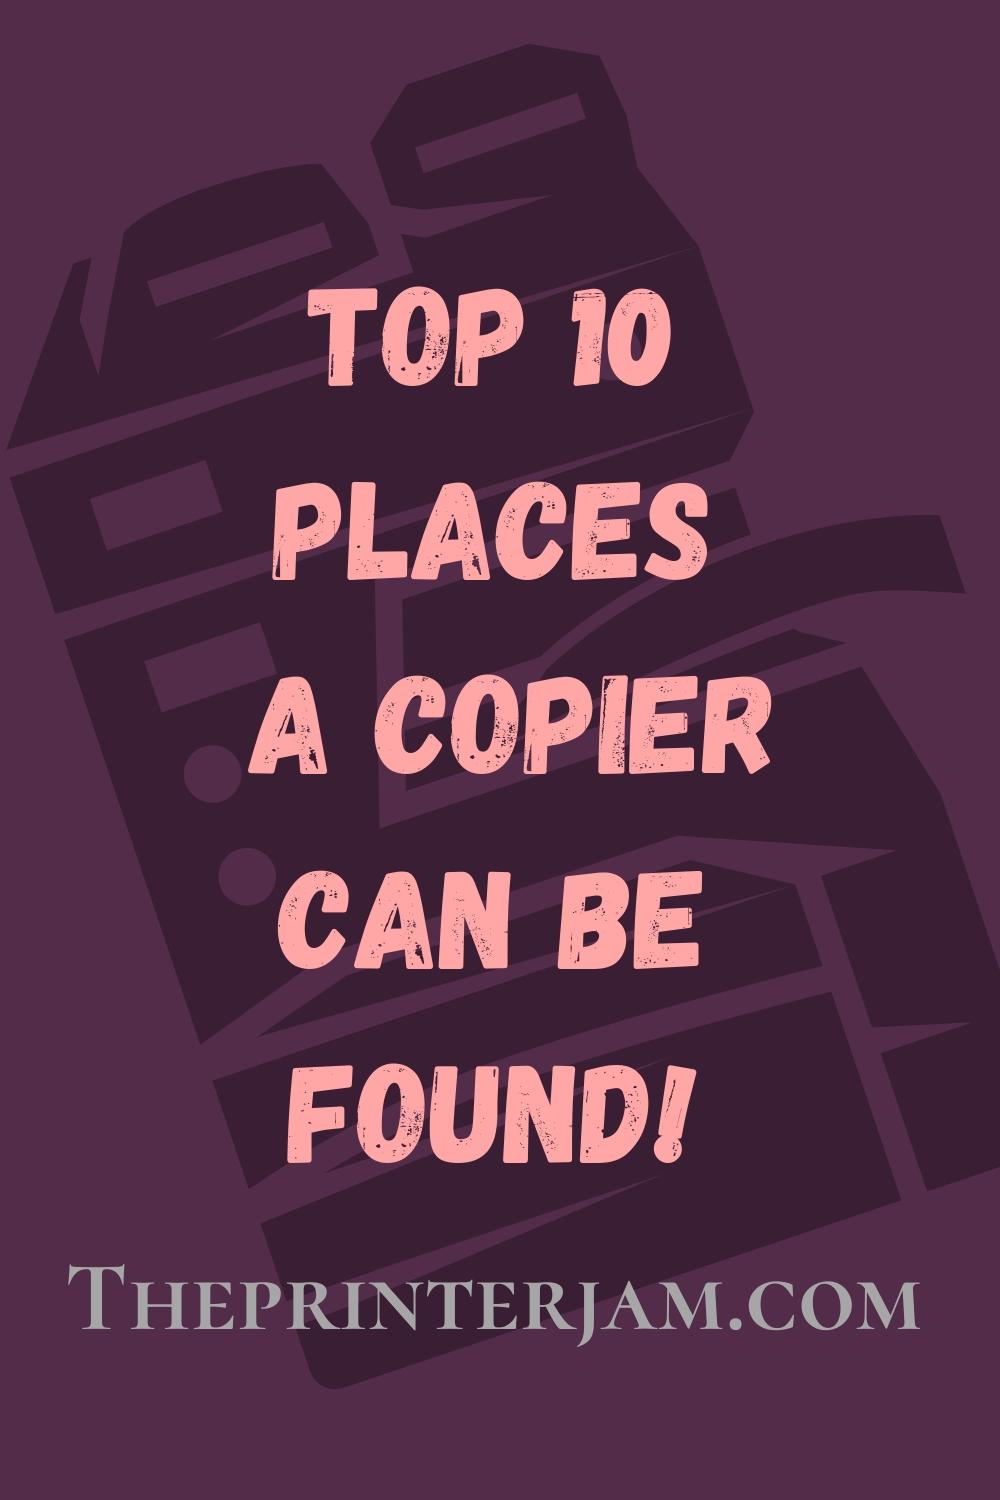 Top 10 Places a Copier is Found